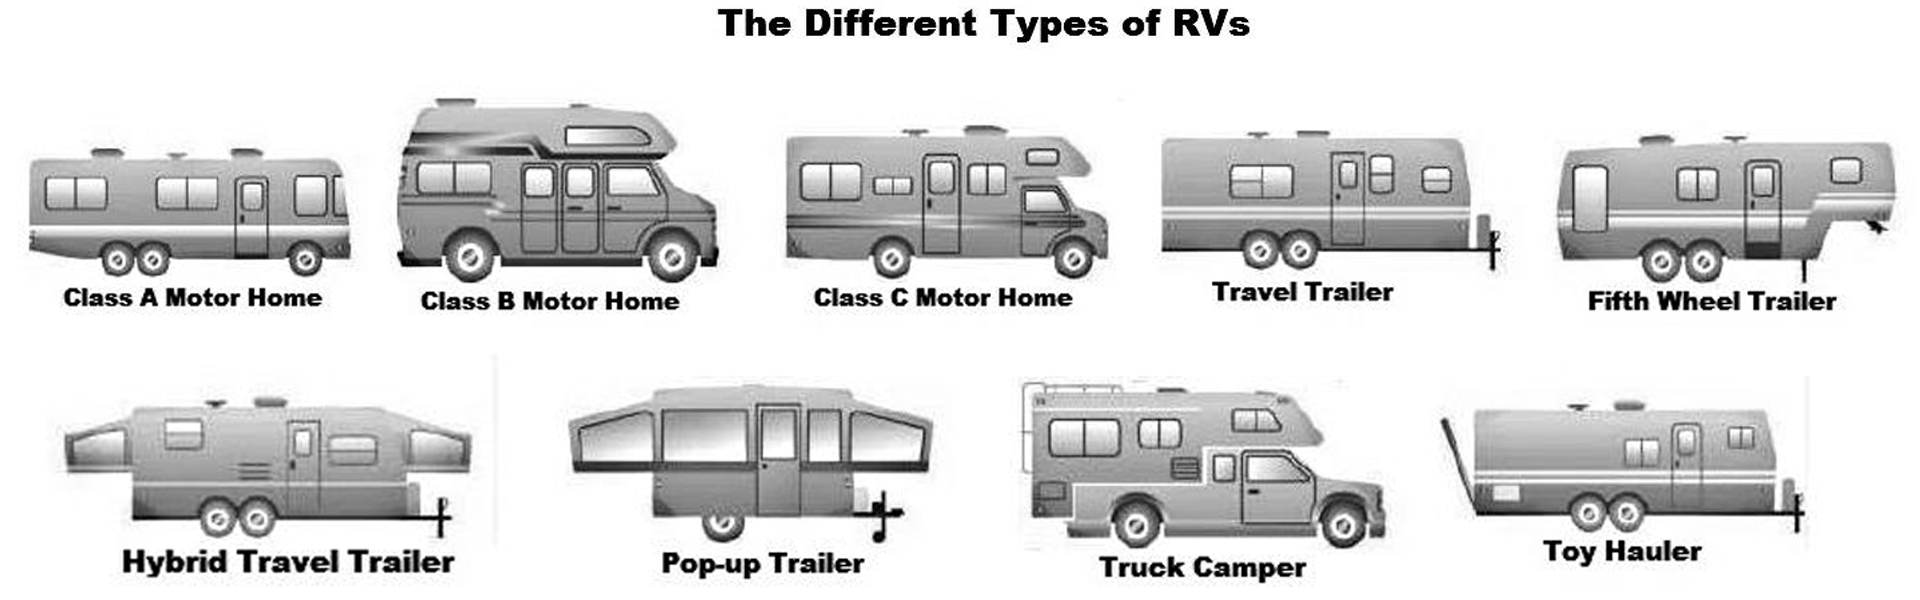 different-types-rvs1.jpg